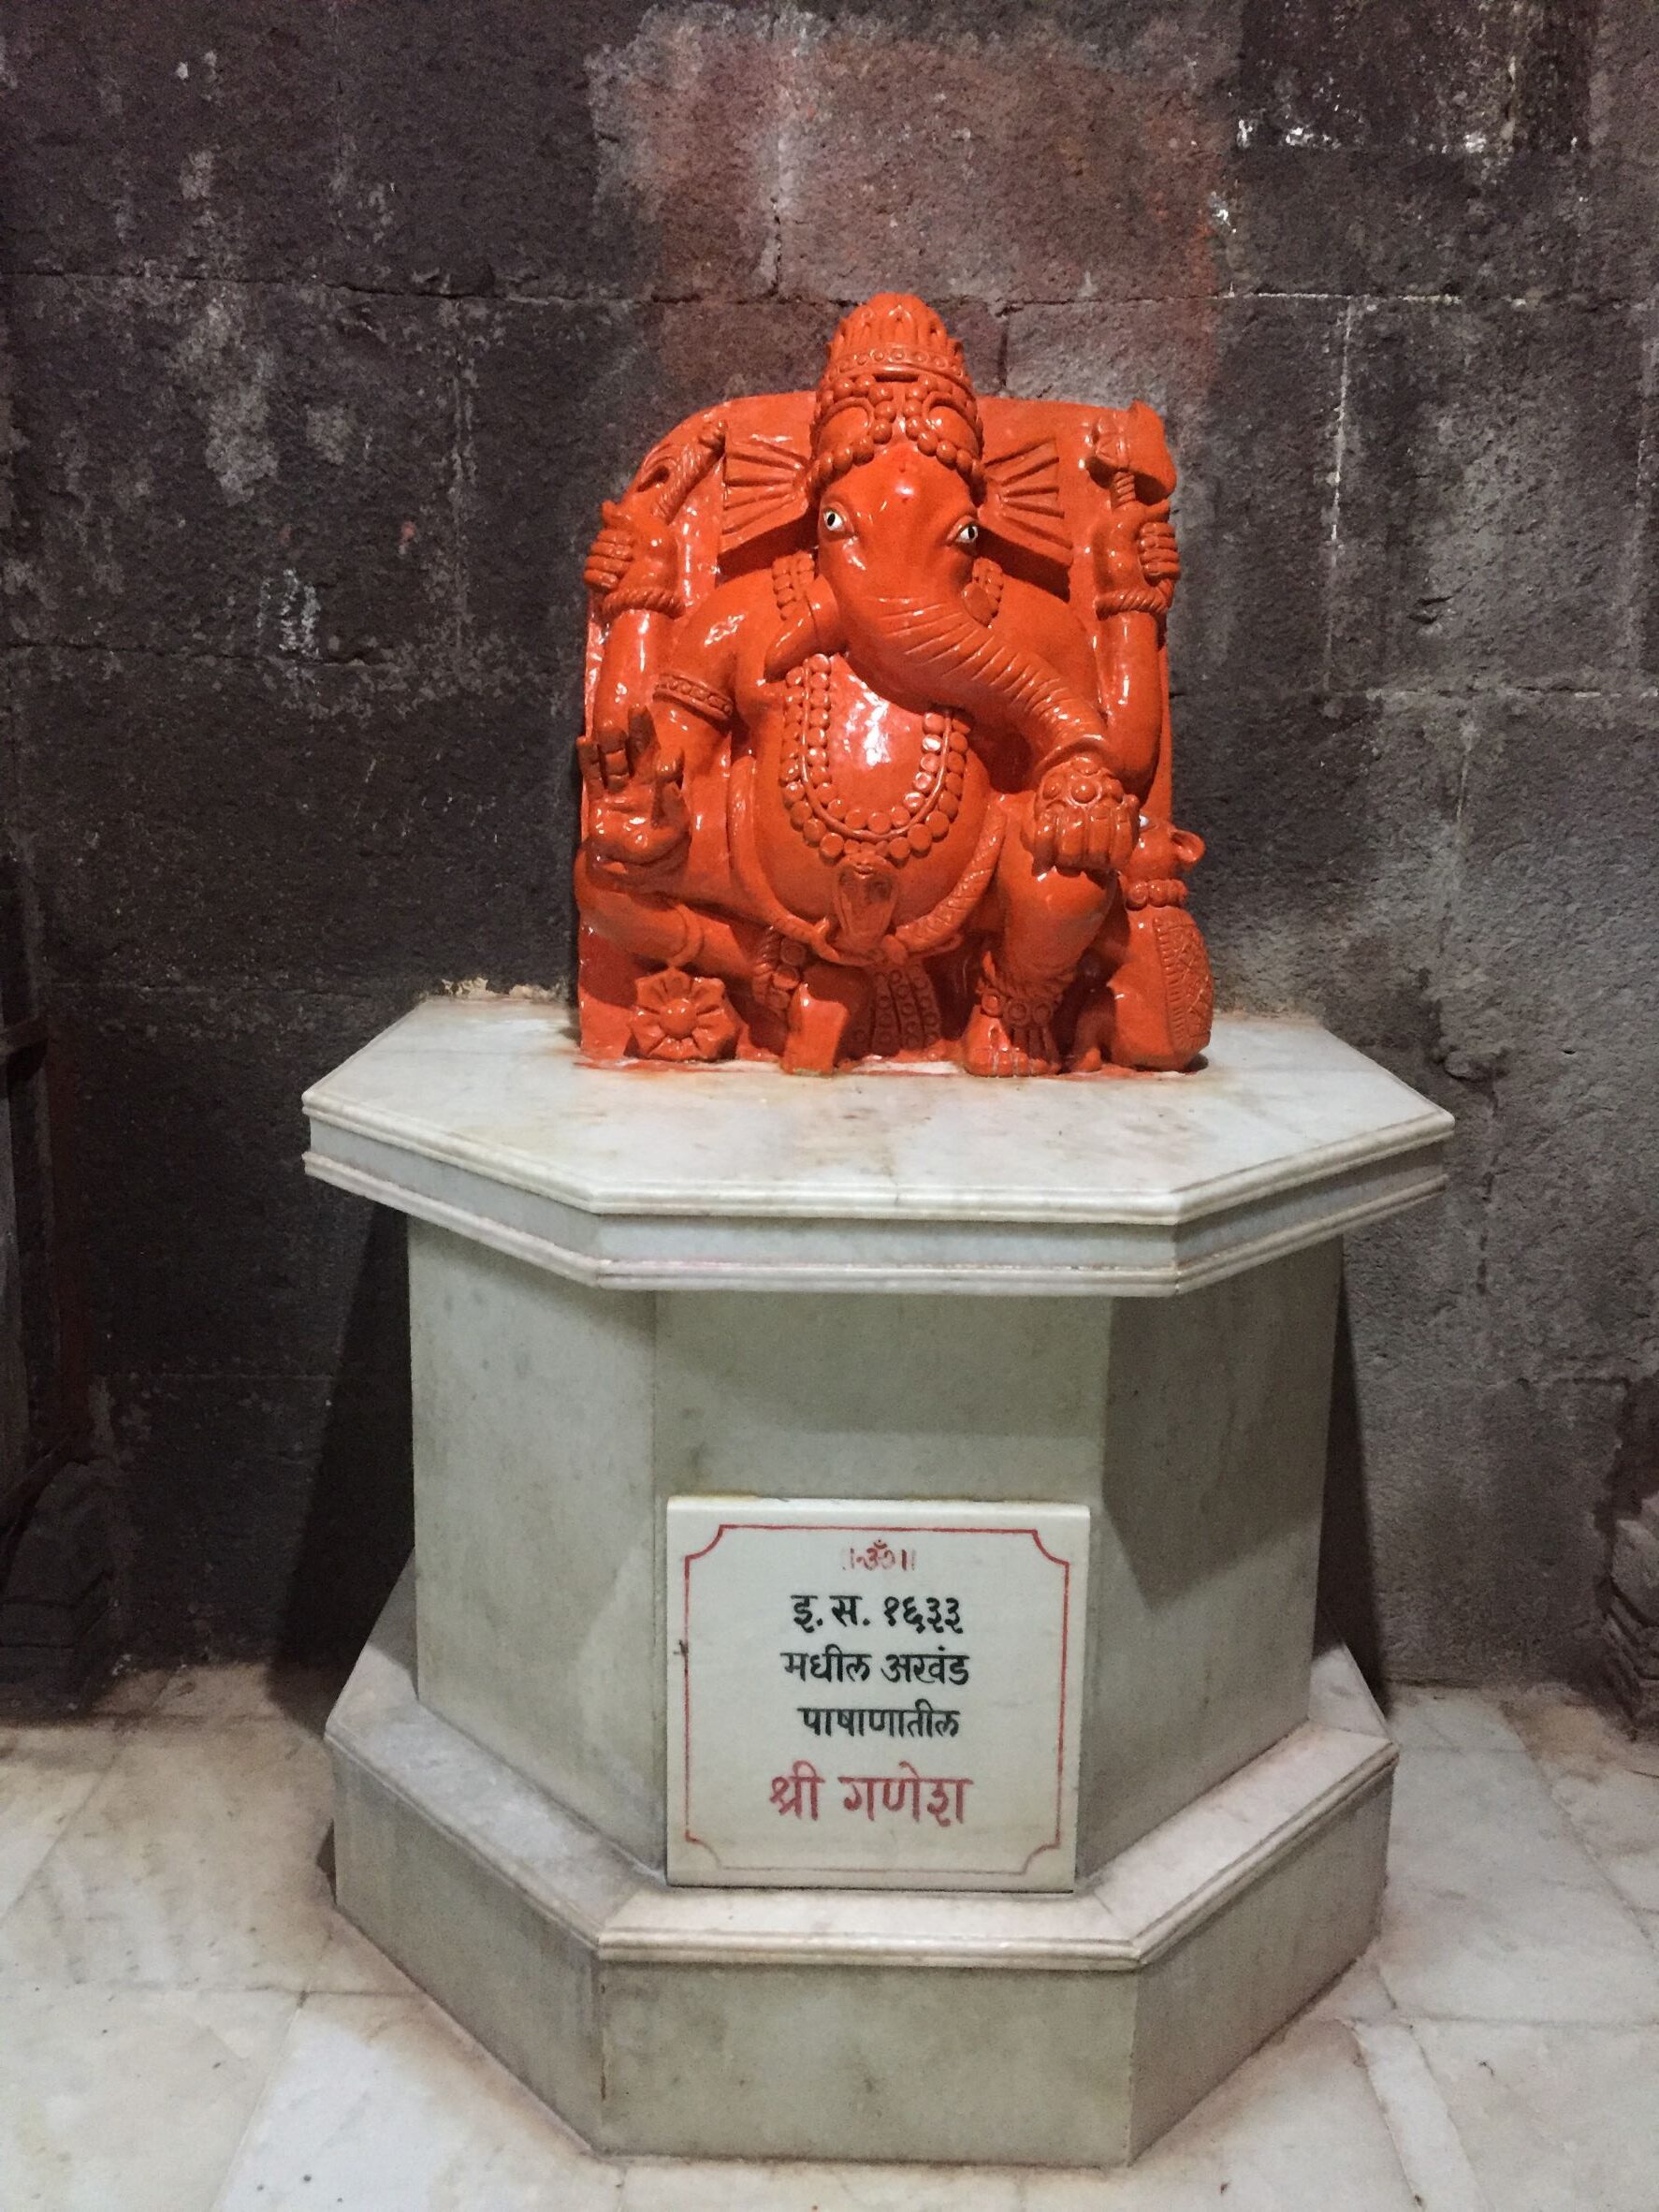 Chatrapati Sambhaji Maharaj